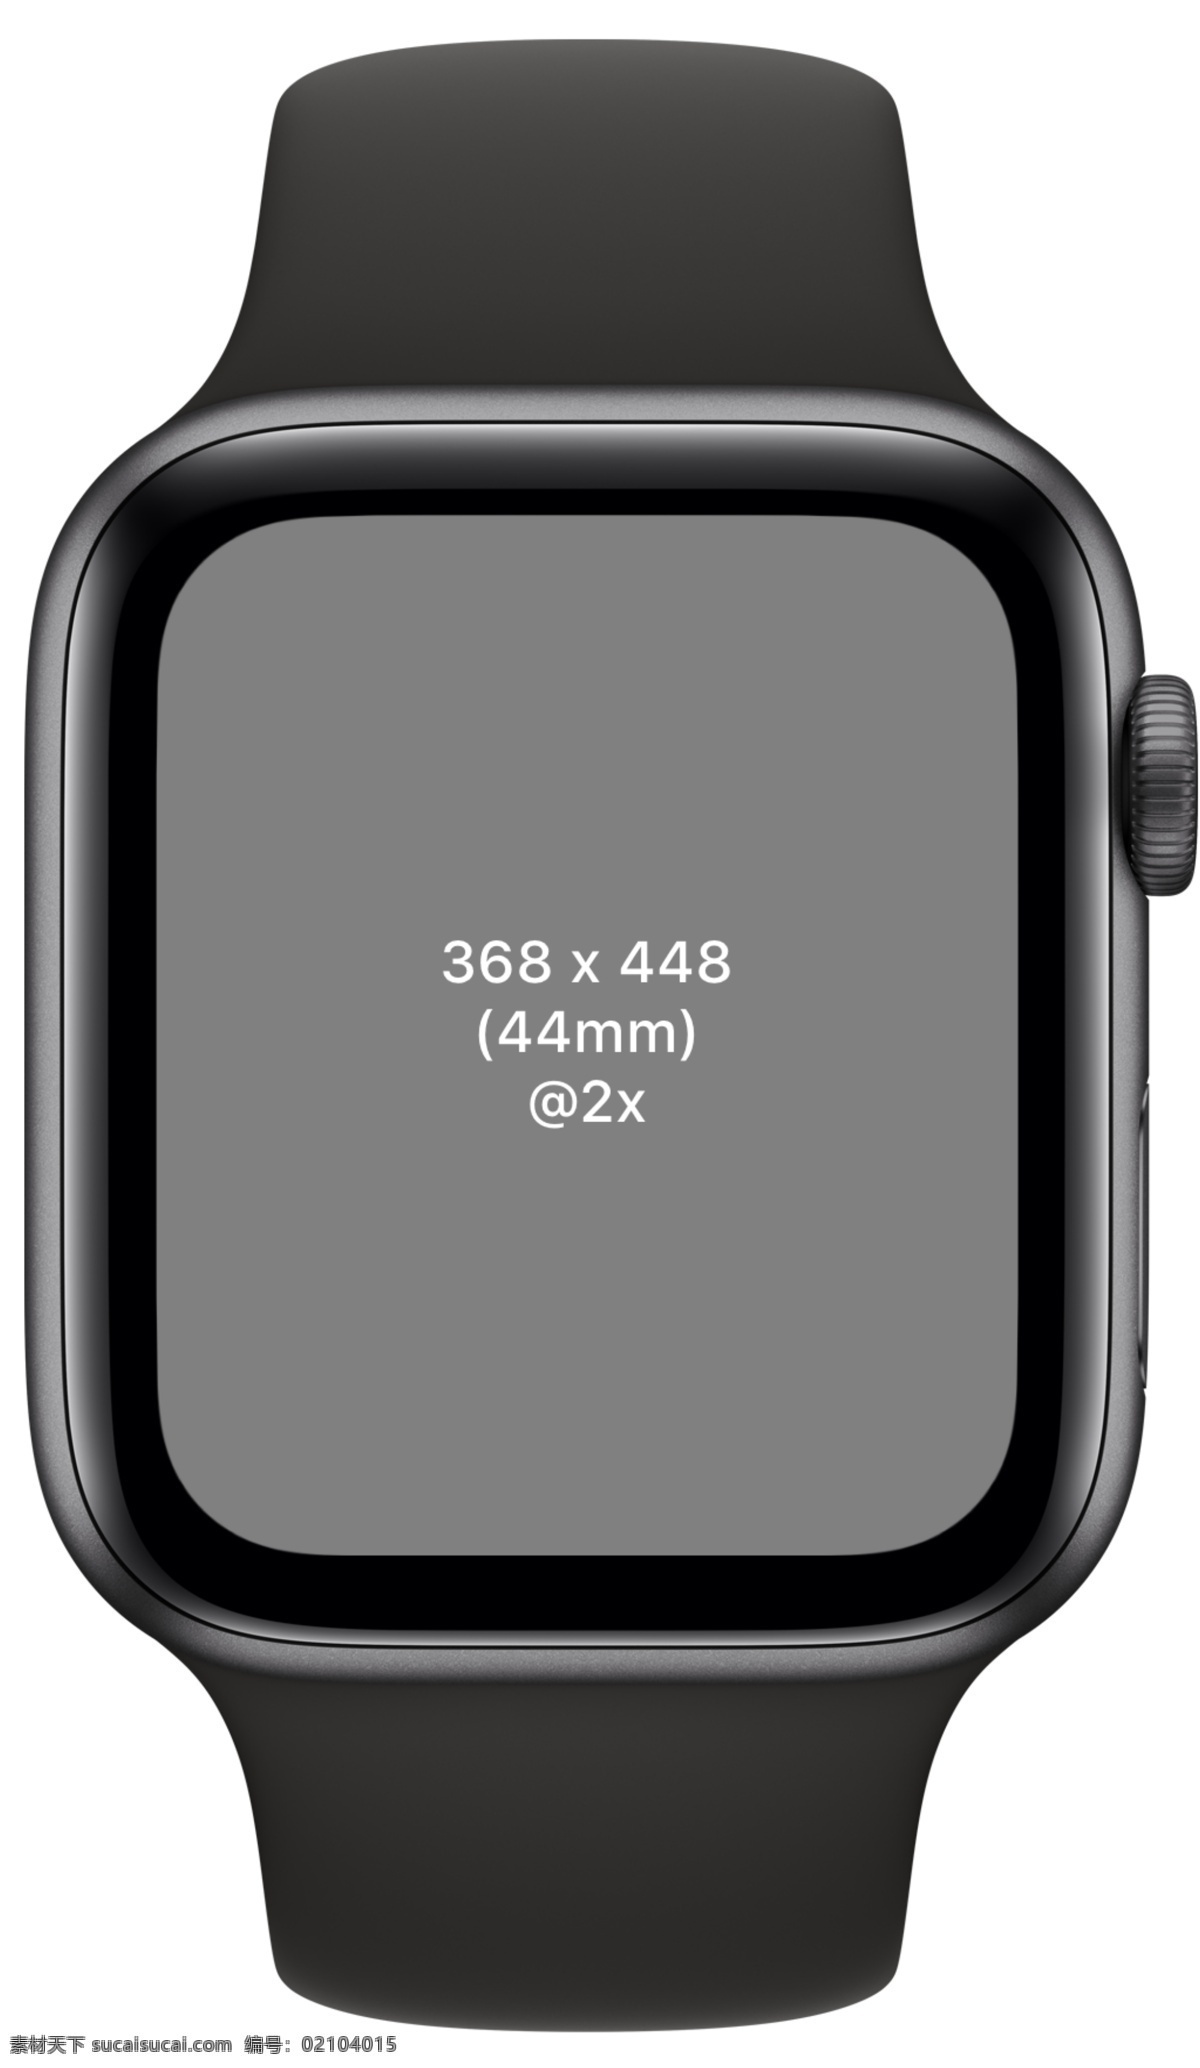 aws mm 苹果 手表 样机 iphone apple watch 苹果手表样机 苹果手表模型 applewatch 模型